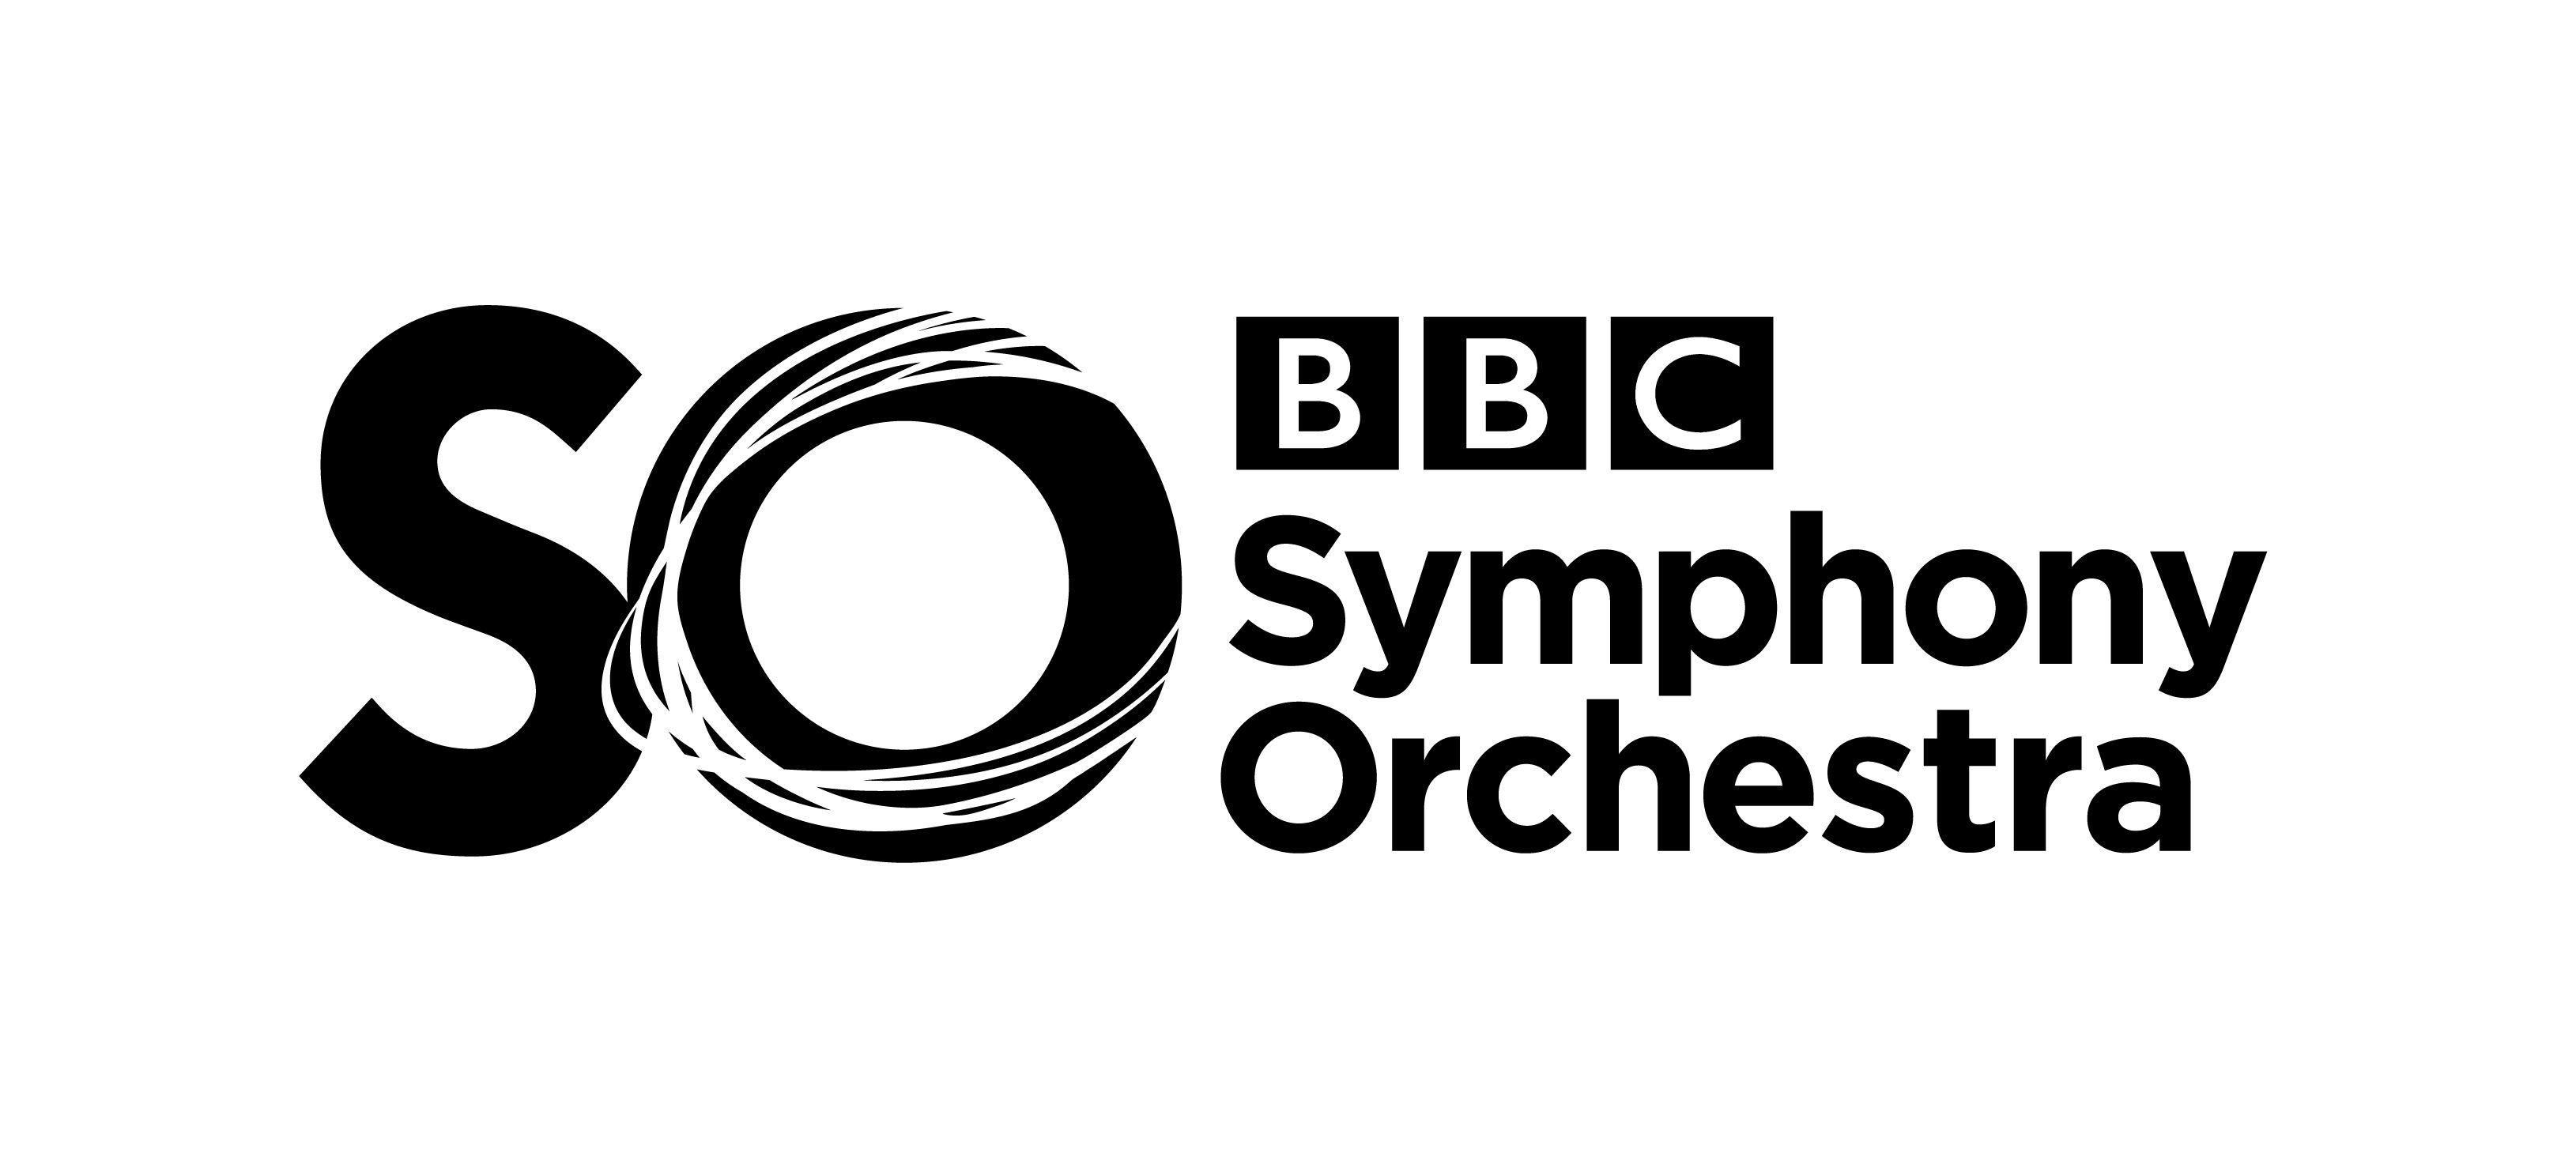 Symphony Logo - File:BBC Symphony Orchestra Logo.jpg - Wikimedia Commons